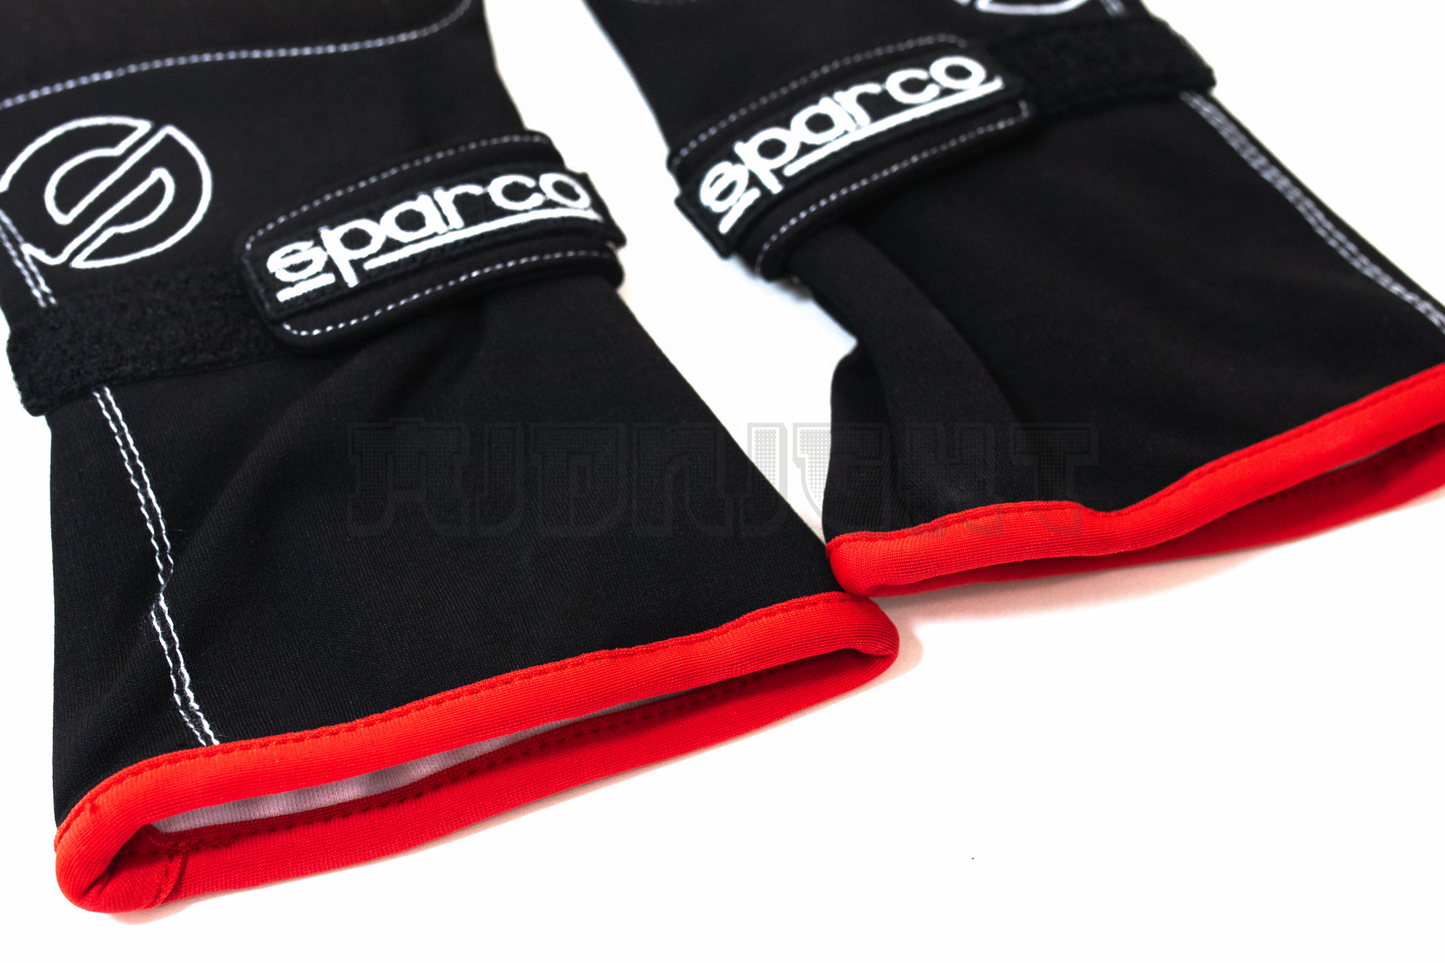 SPARCO Black Racing Gloves